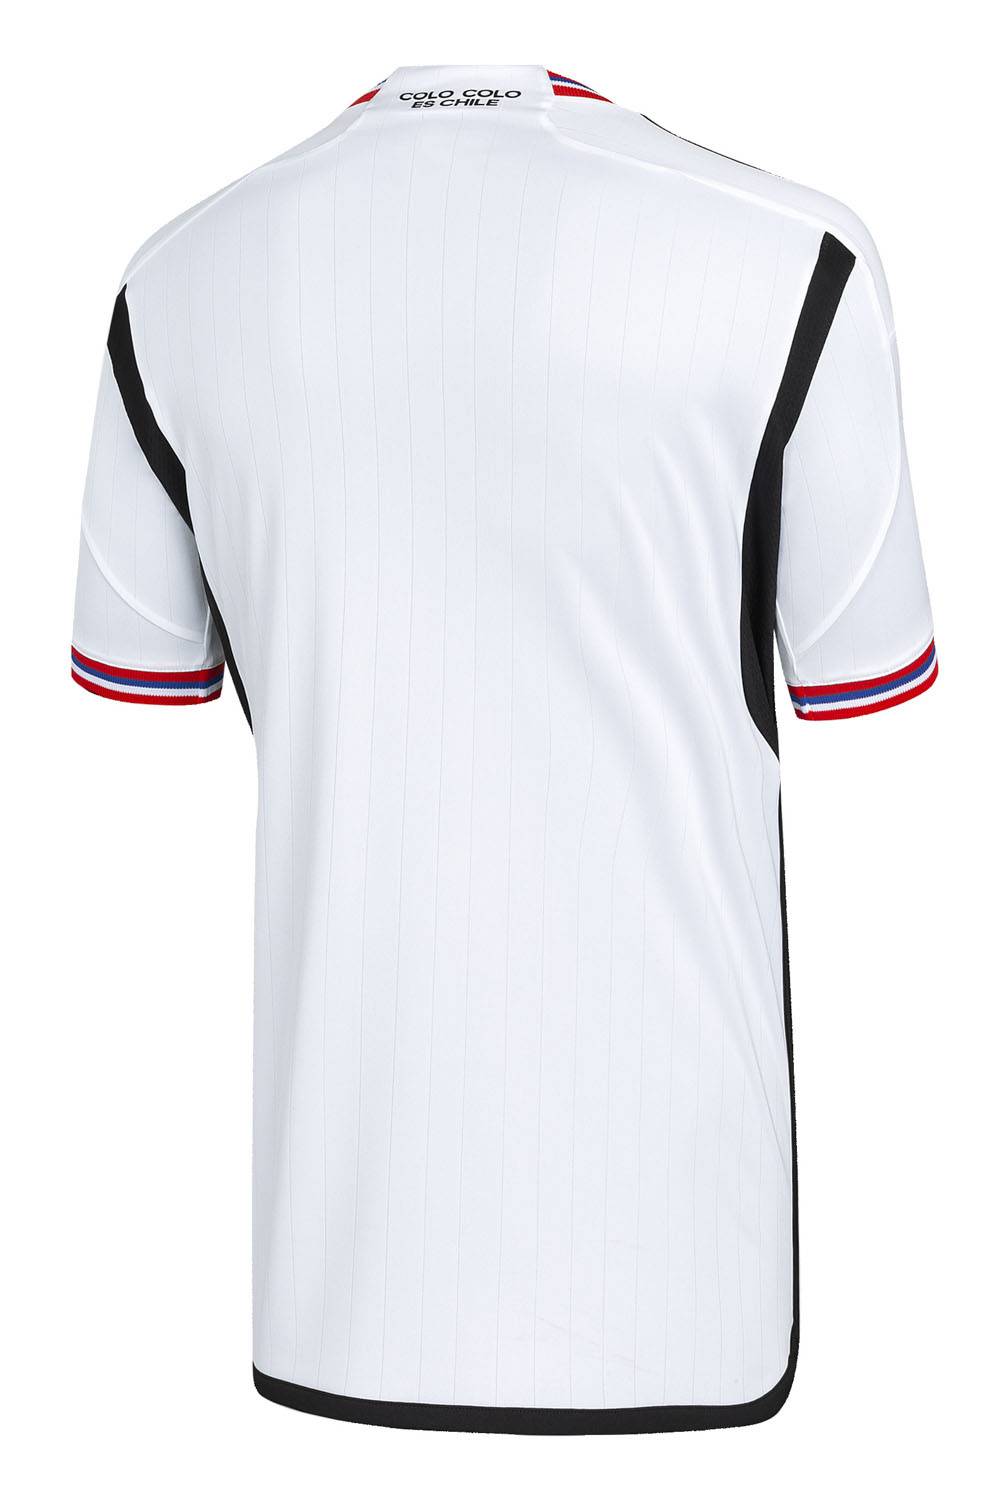 ADIDAS - Camiseta De Fútbol Local Colo Colo Regular Fit Hombre Adidas